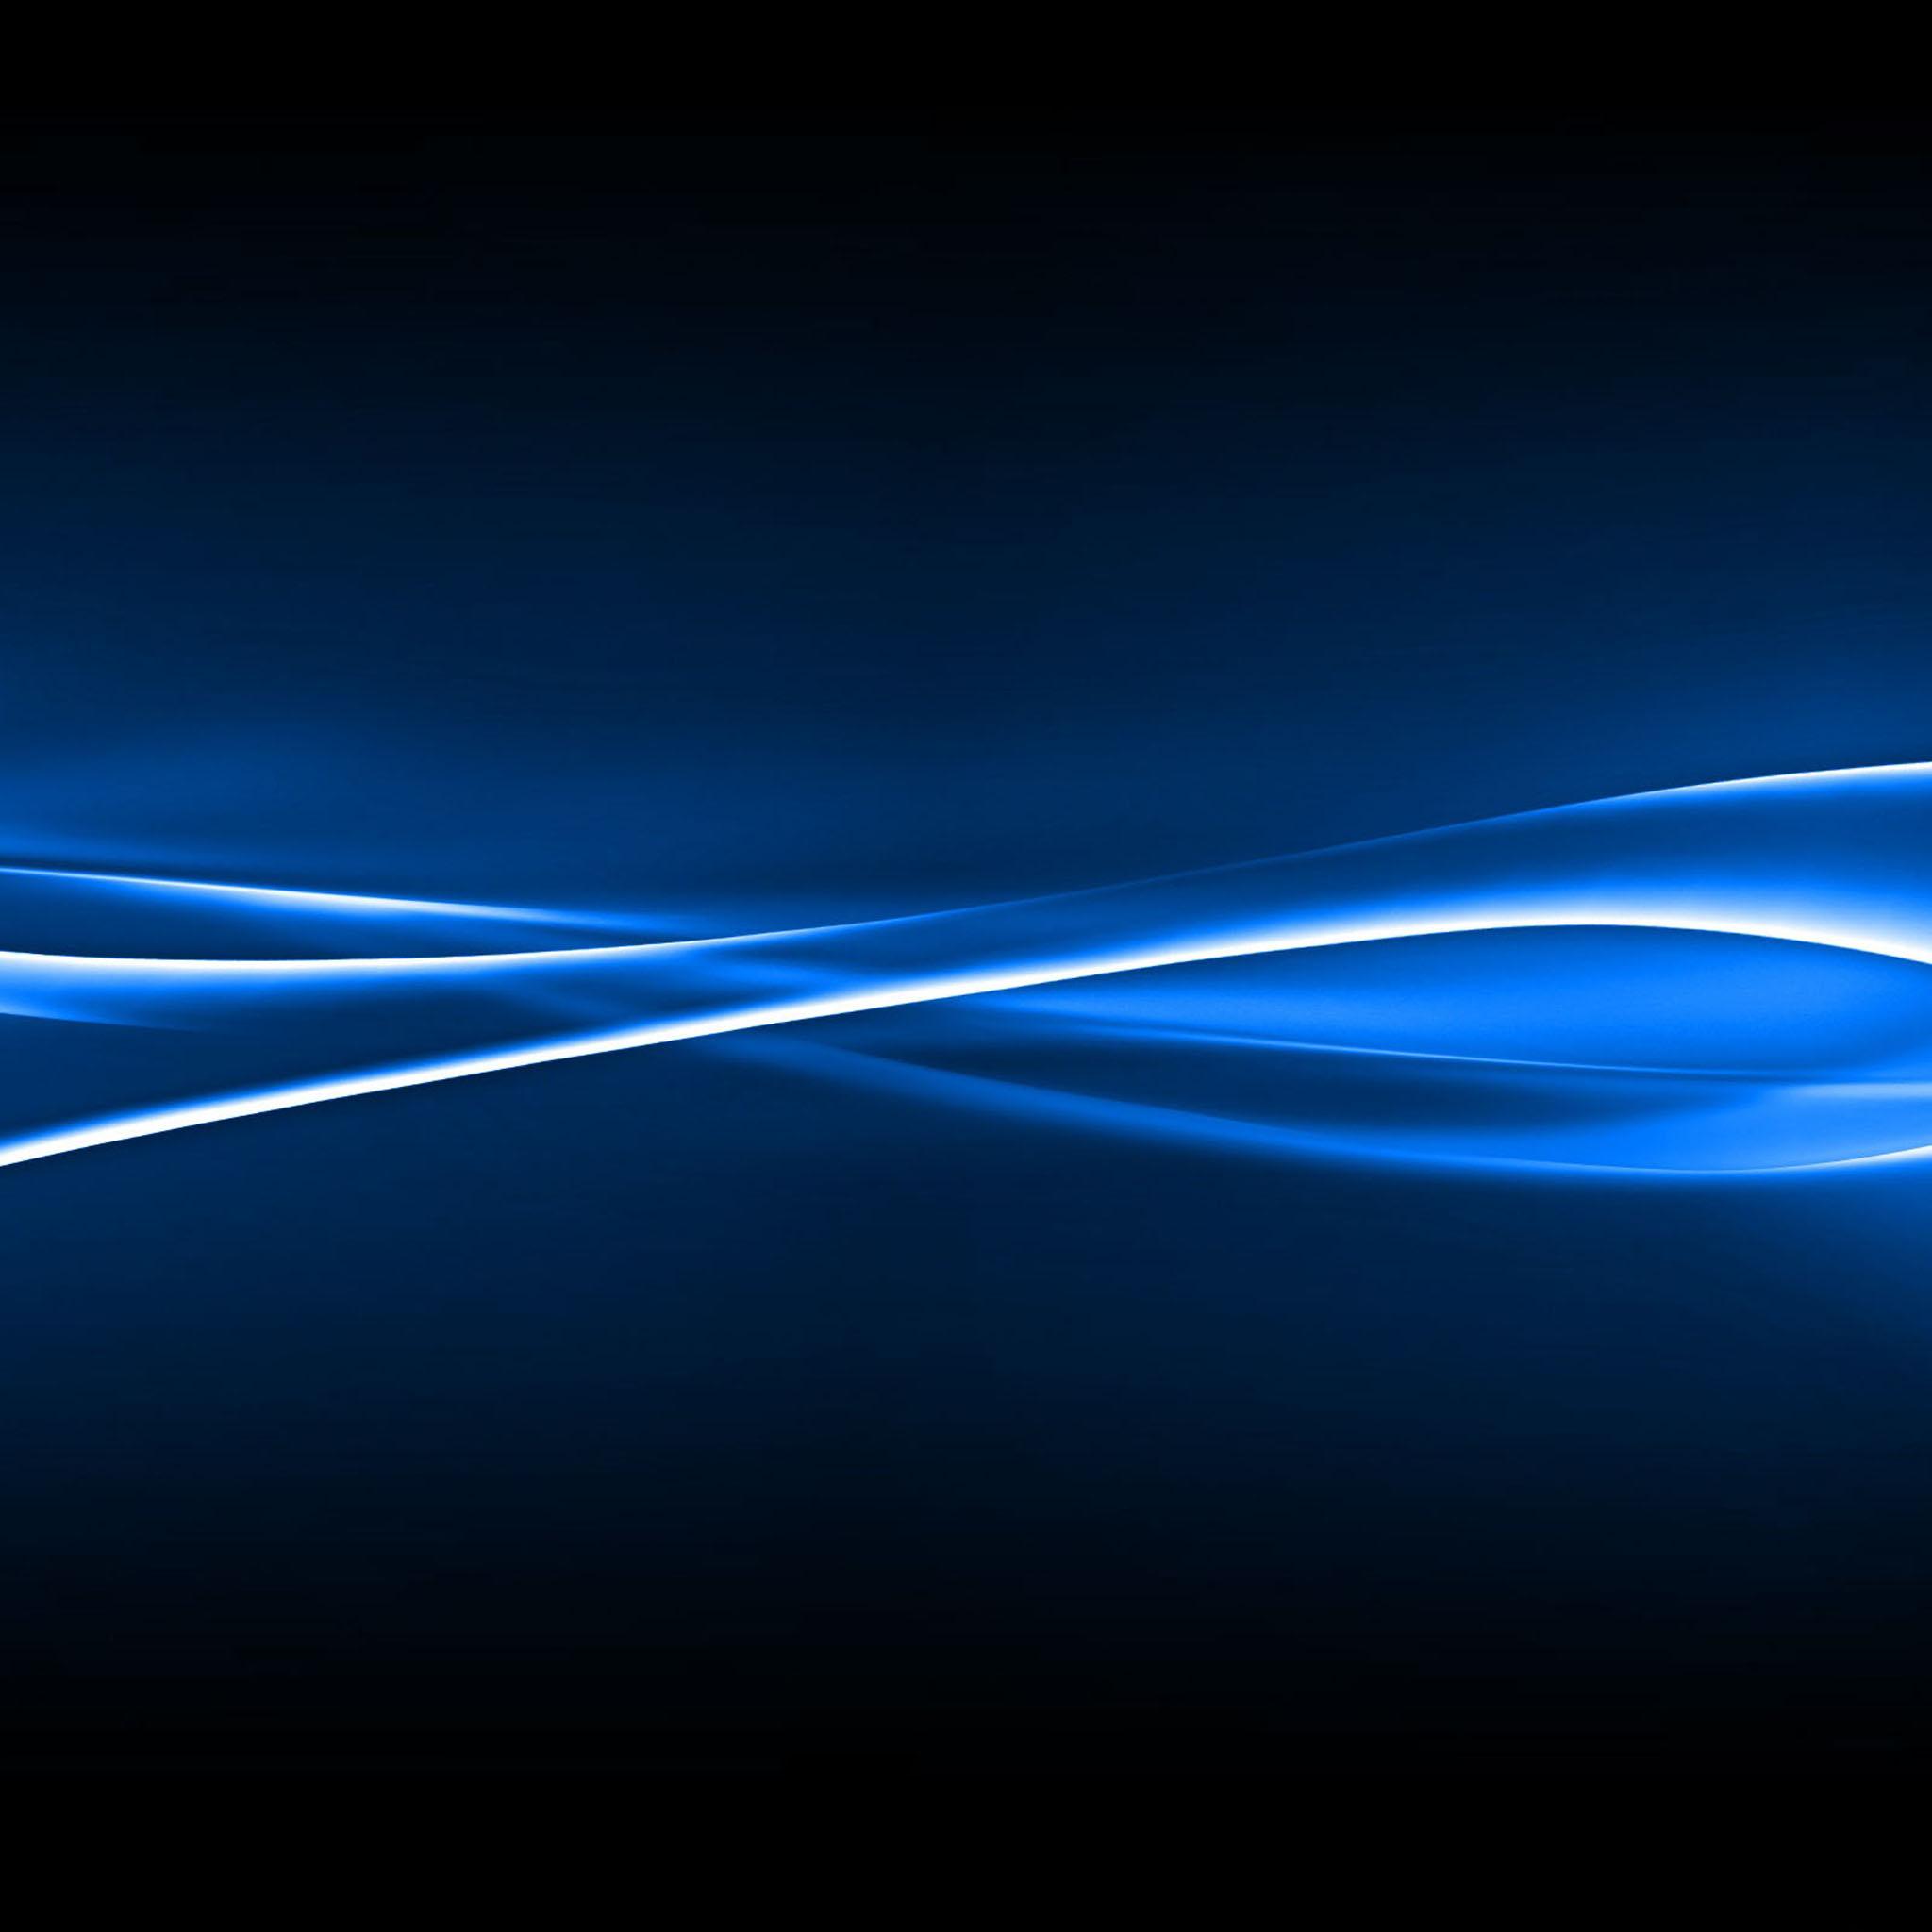 Blue Light Wave Ipad Wallpaper Desktop Ipad タブレット壁紙